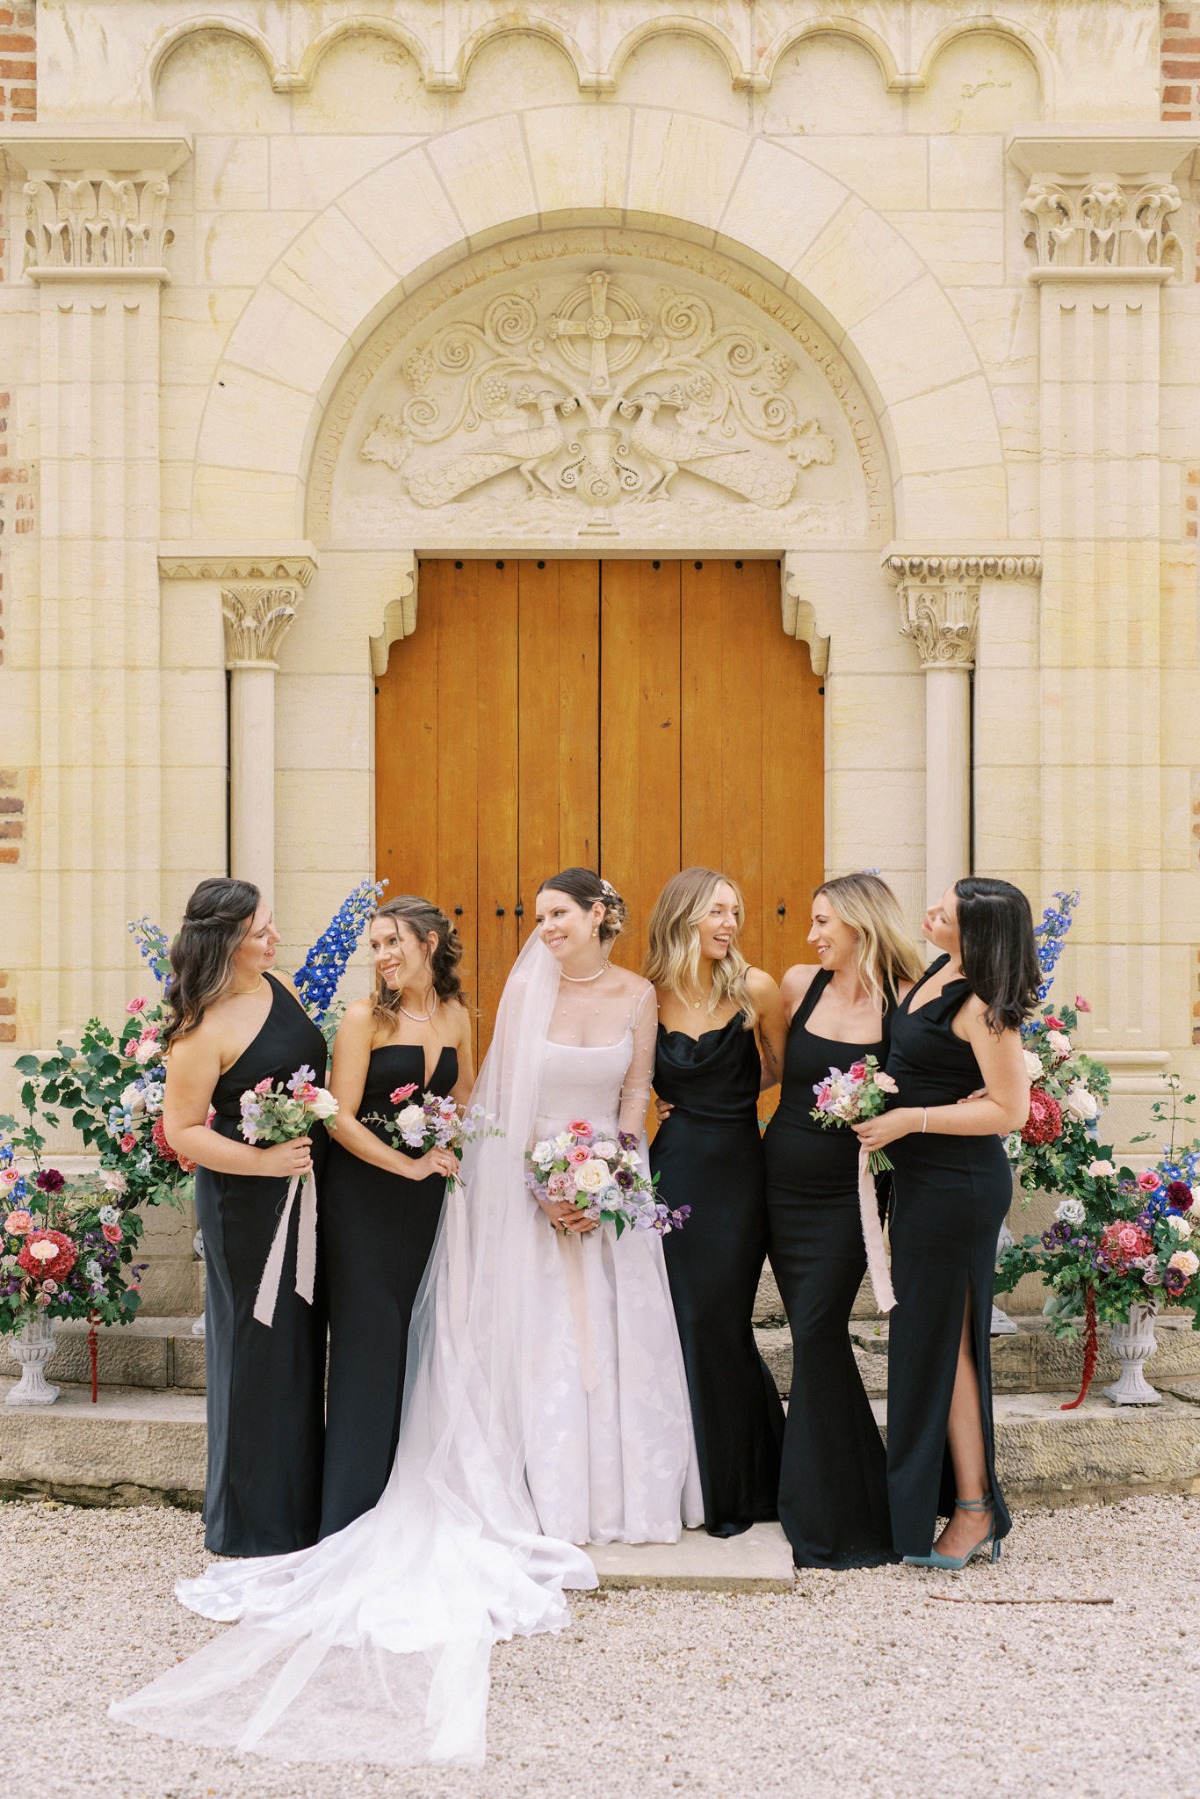 Monochrome French bridal party fashion